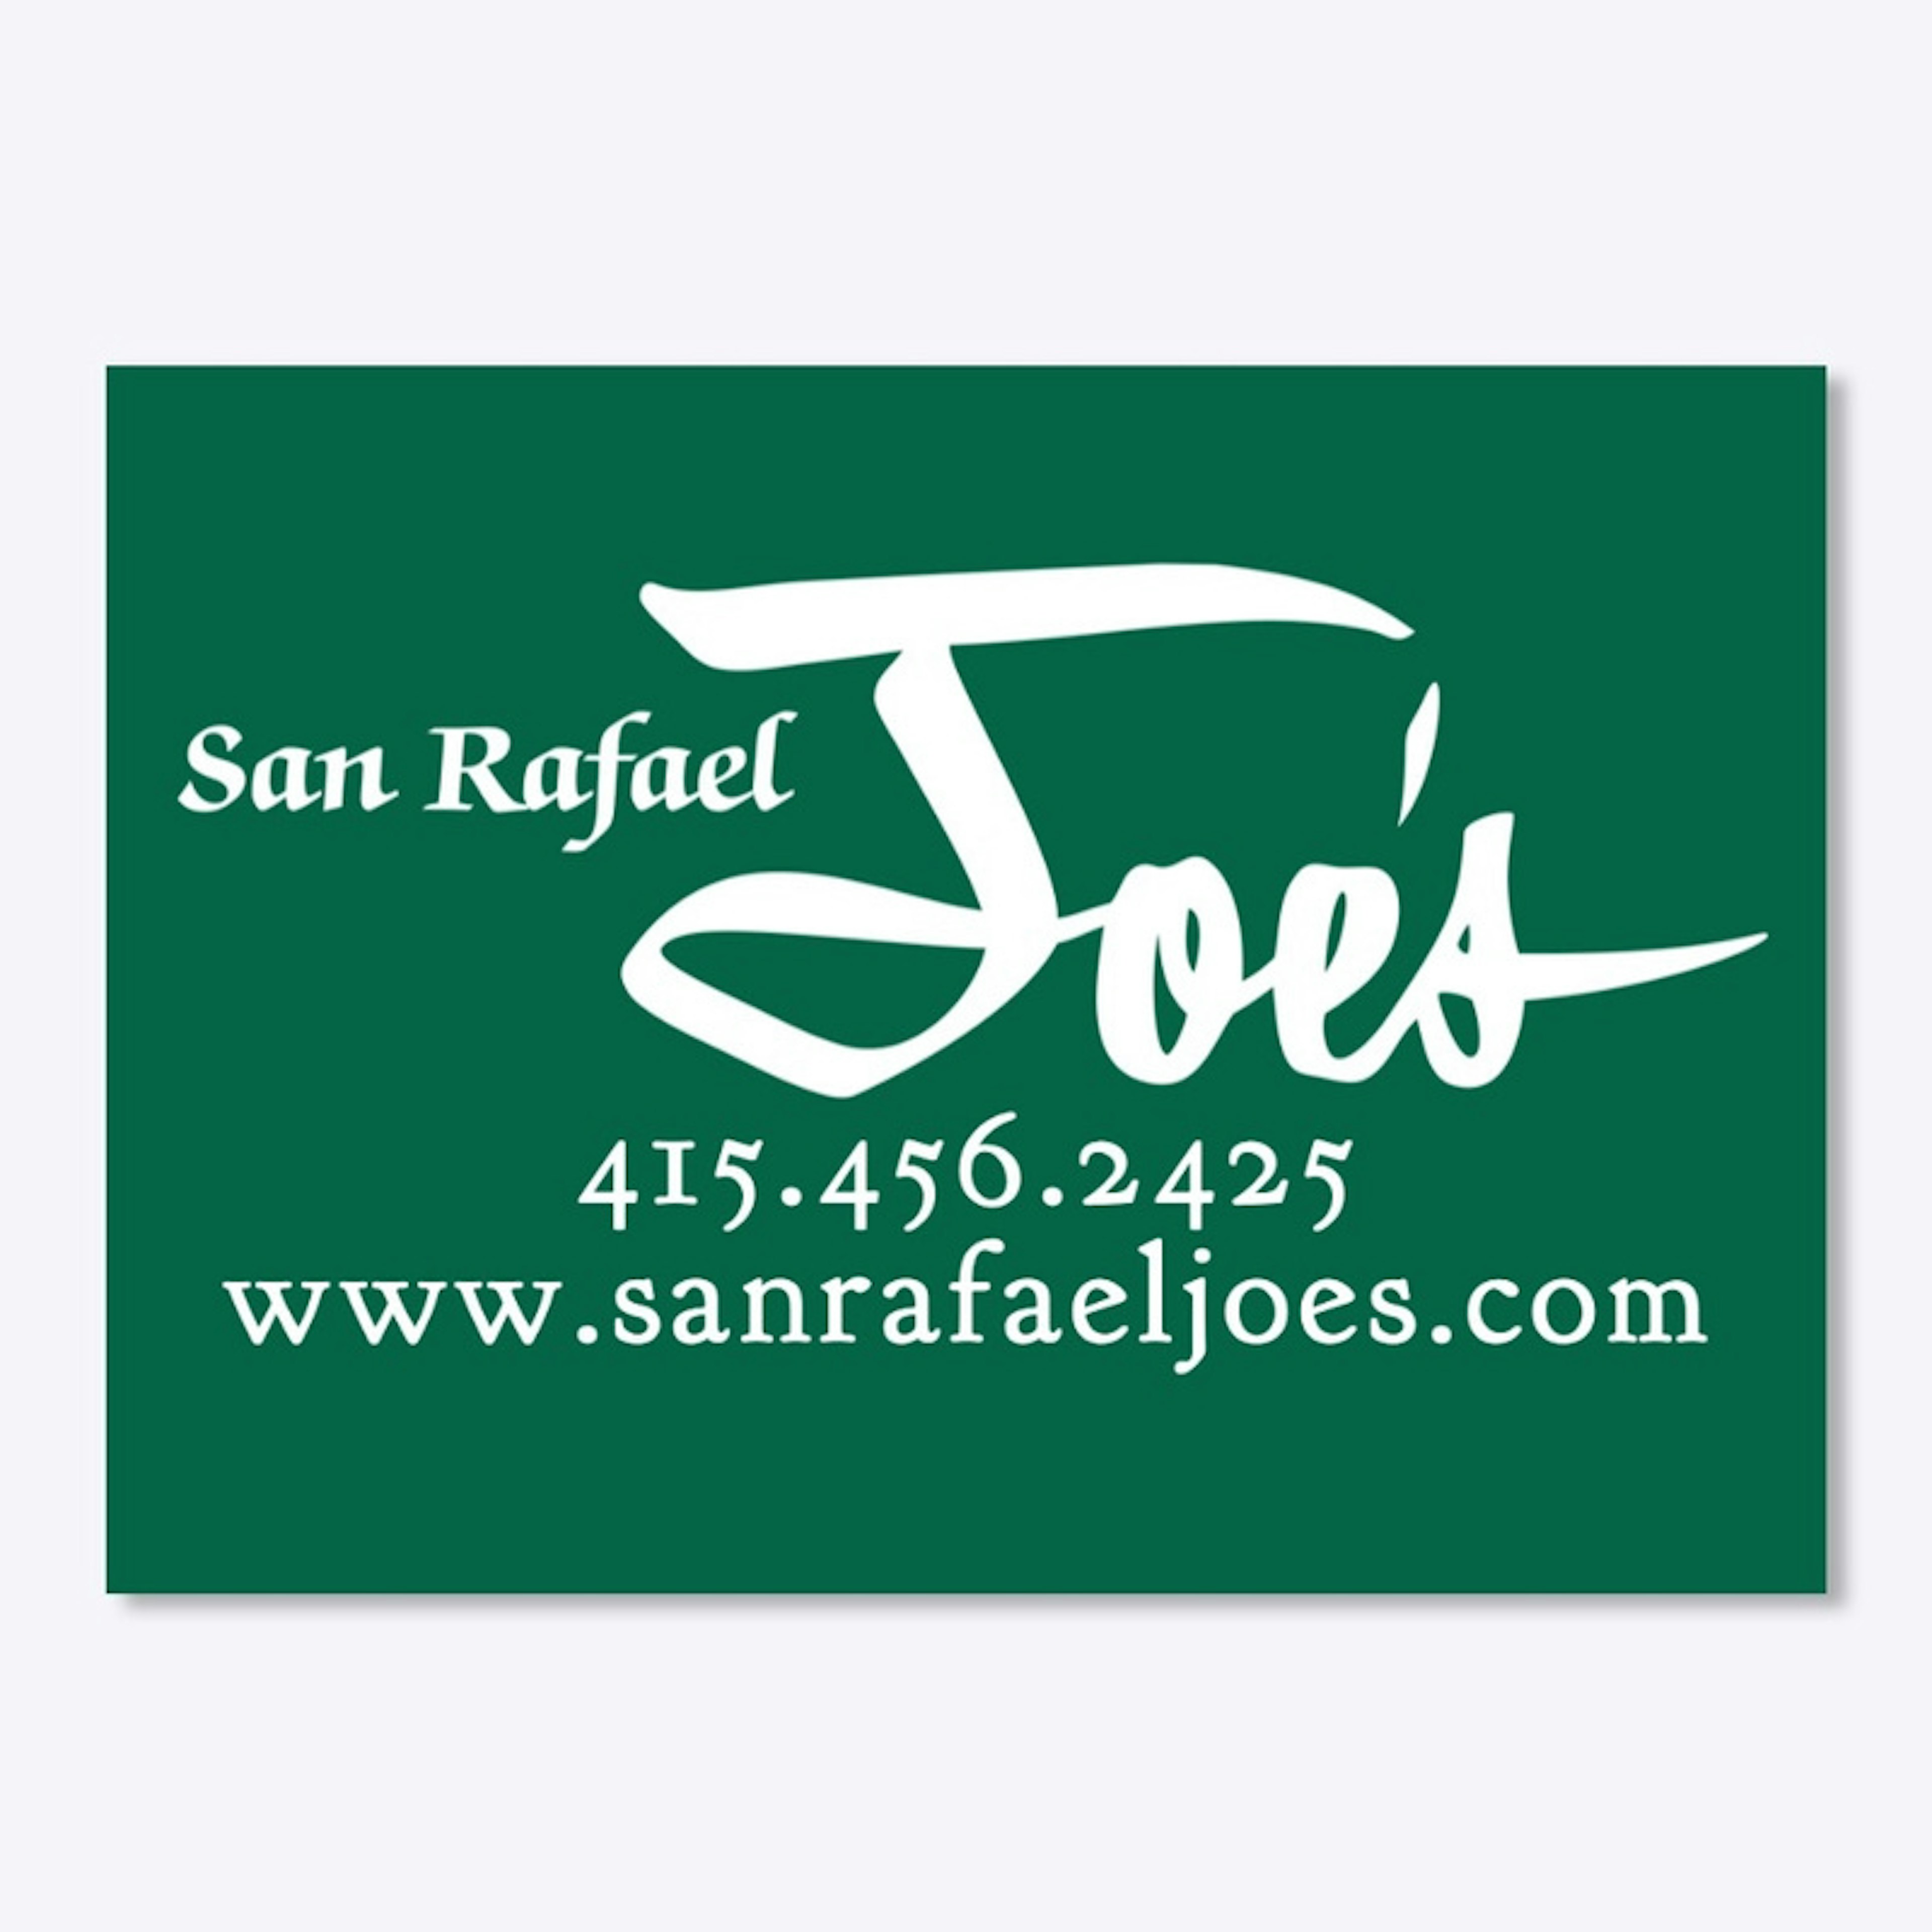 San Rafael Joe's Gear